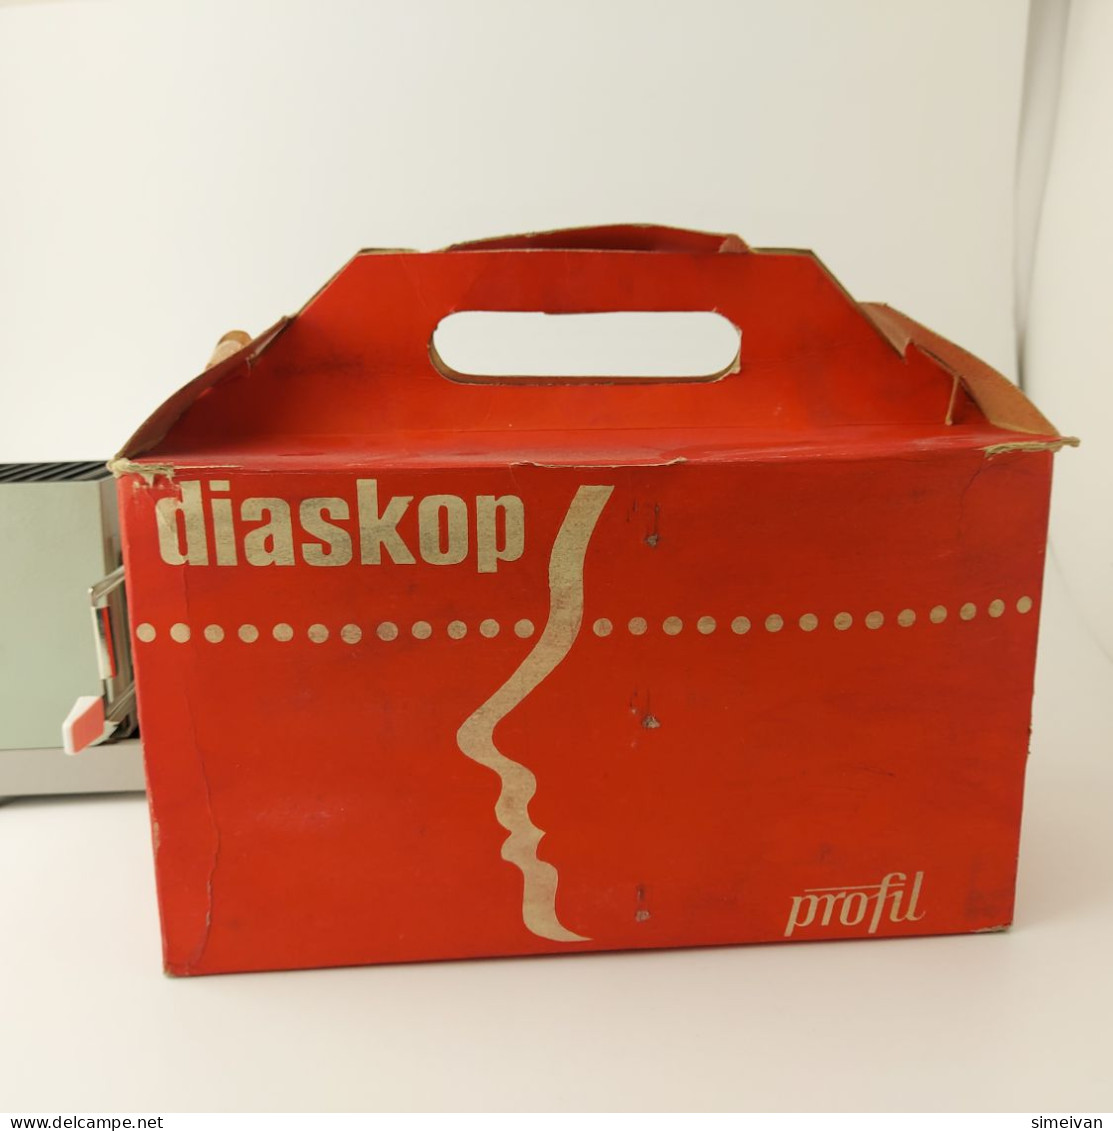 Vintage Diaskop Predom Profile Slide Viewer Varimex Made in Poland #5451